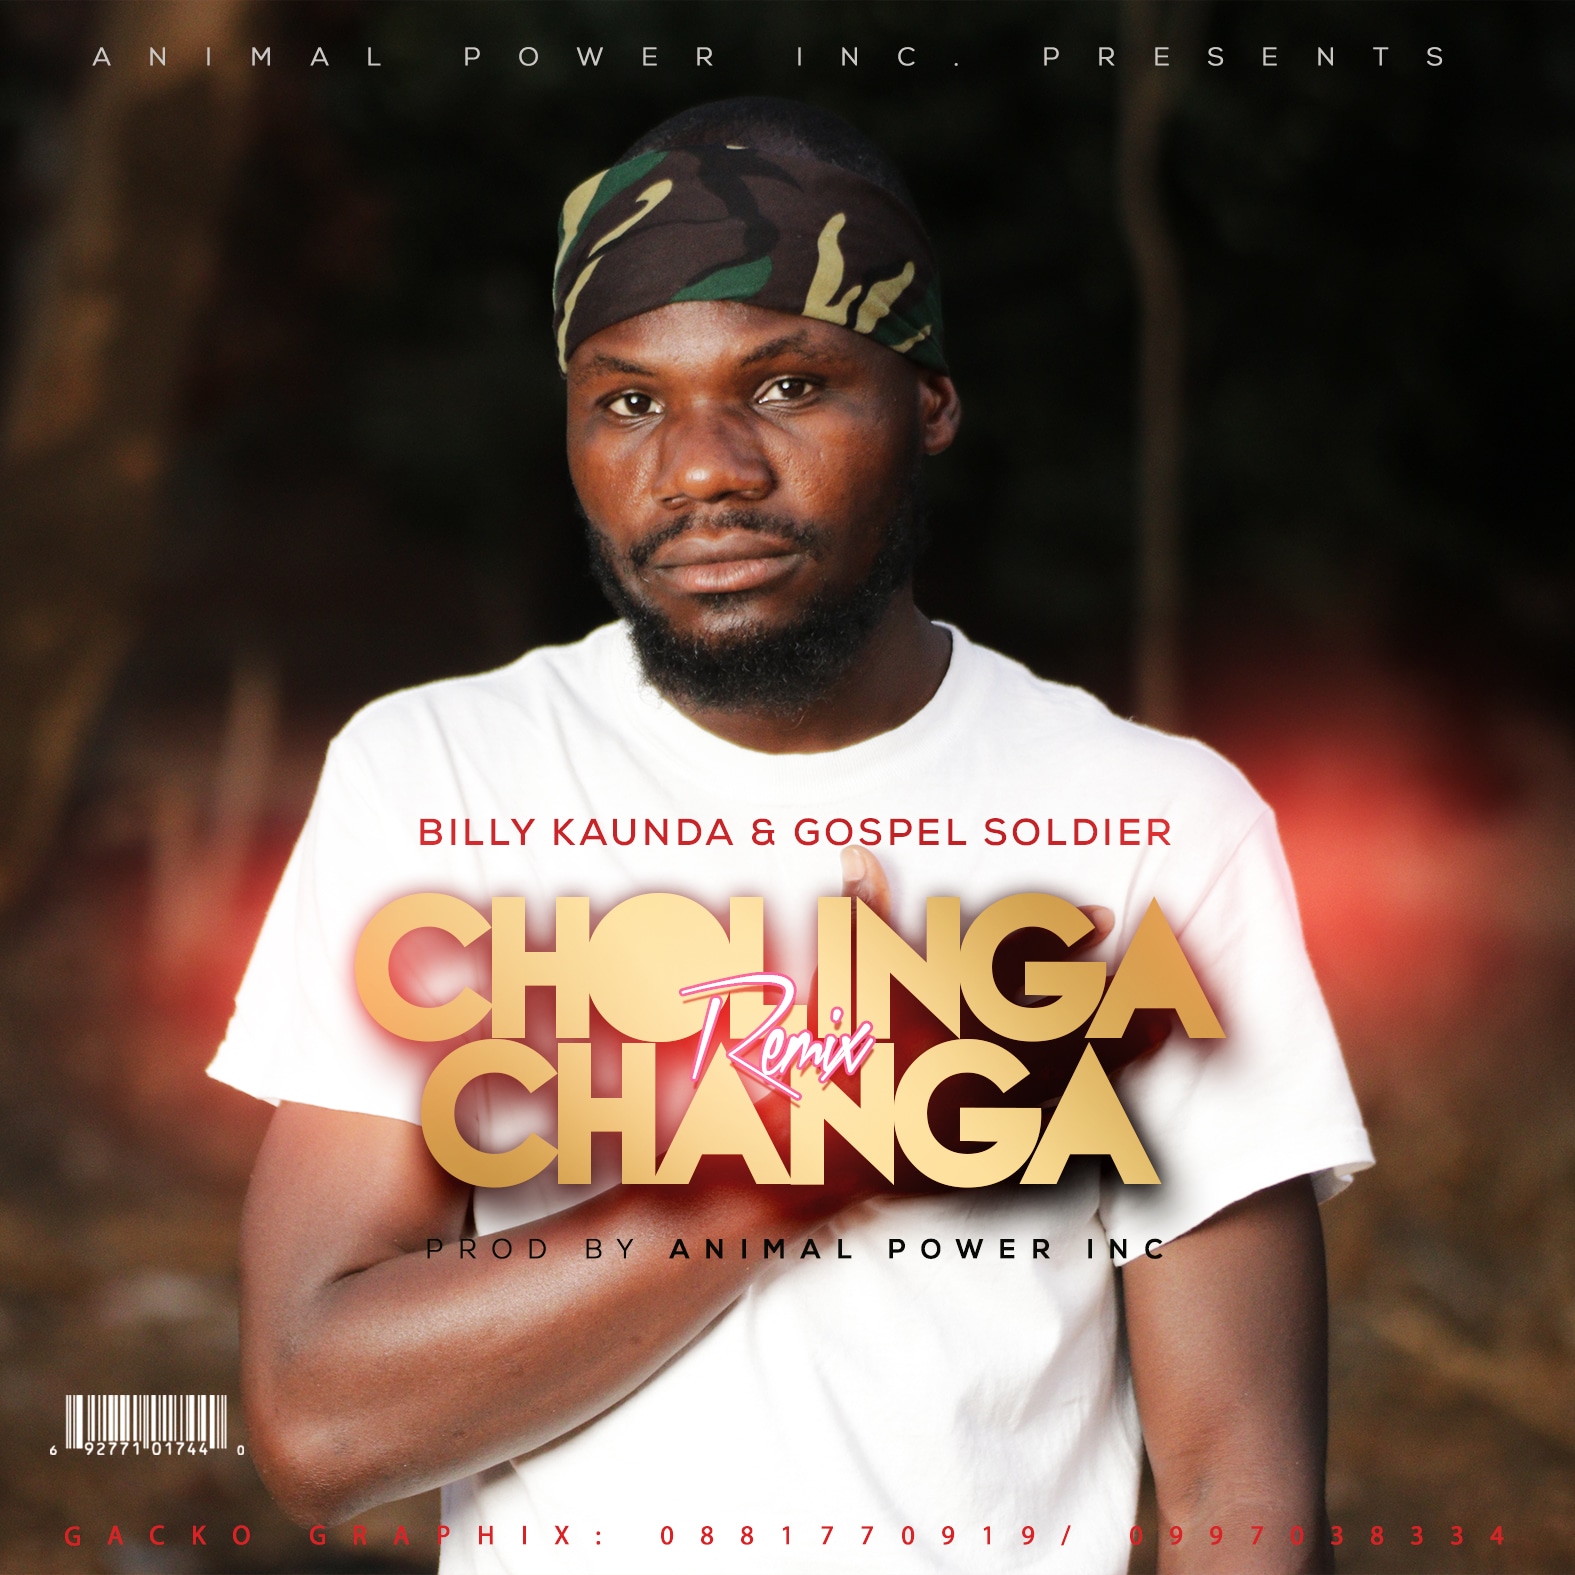  [Music Download]Billy Kaunda and Gospel Soldier – Cholinga Changa Remix